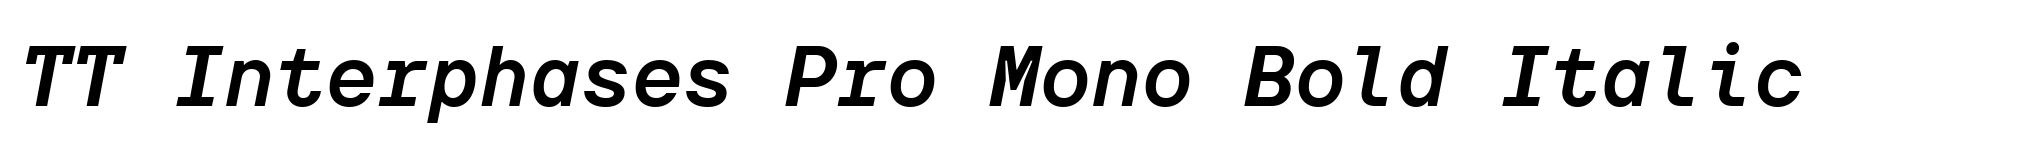 TT Interphases Pro Mono Bold Italic image